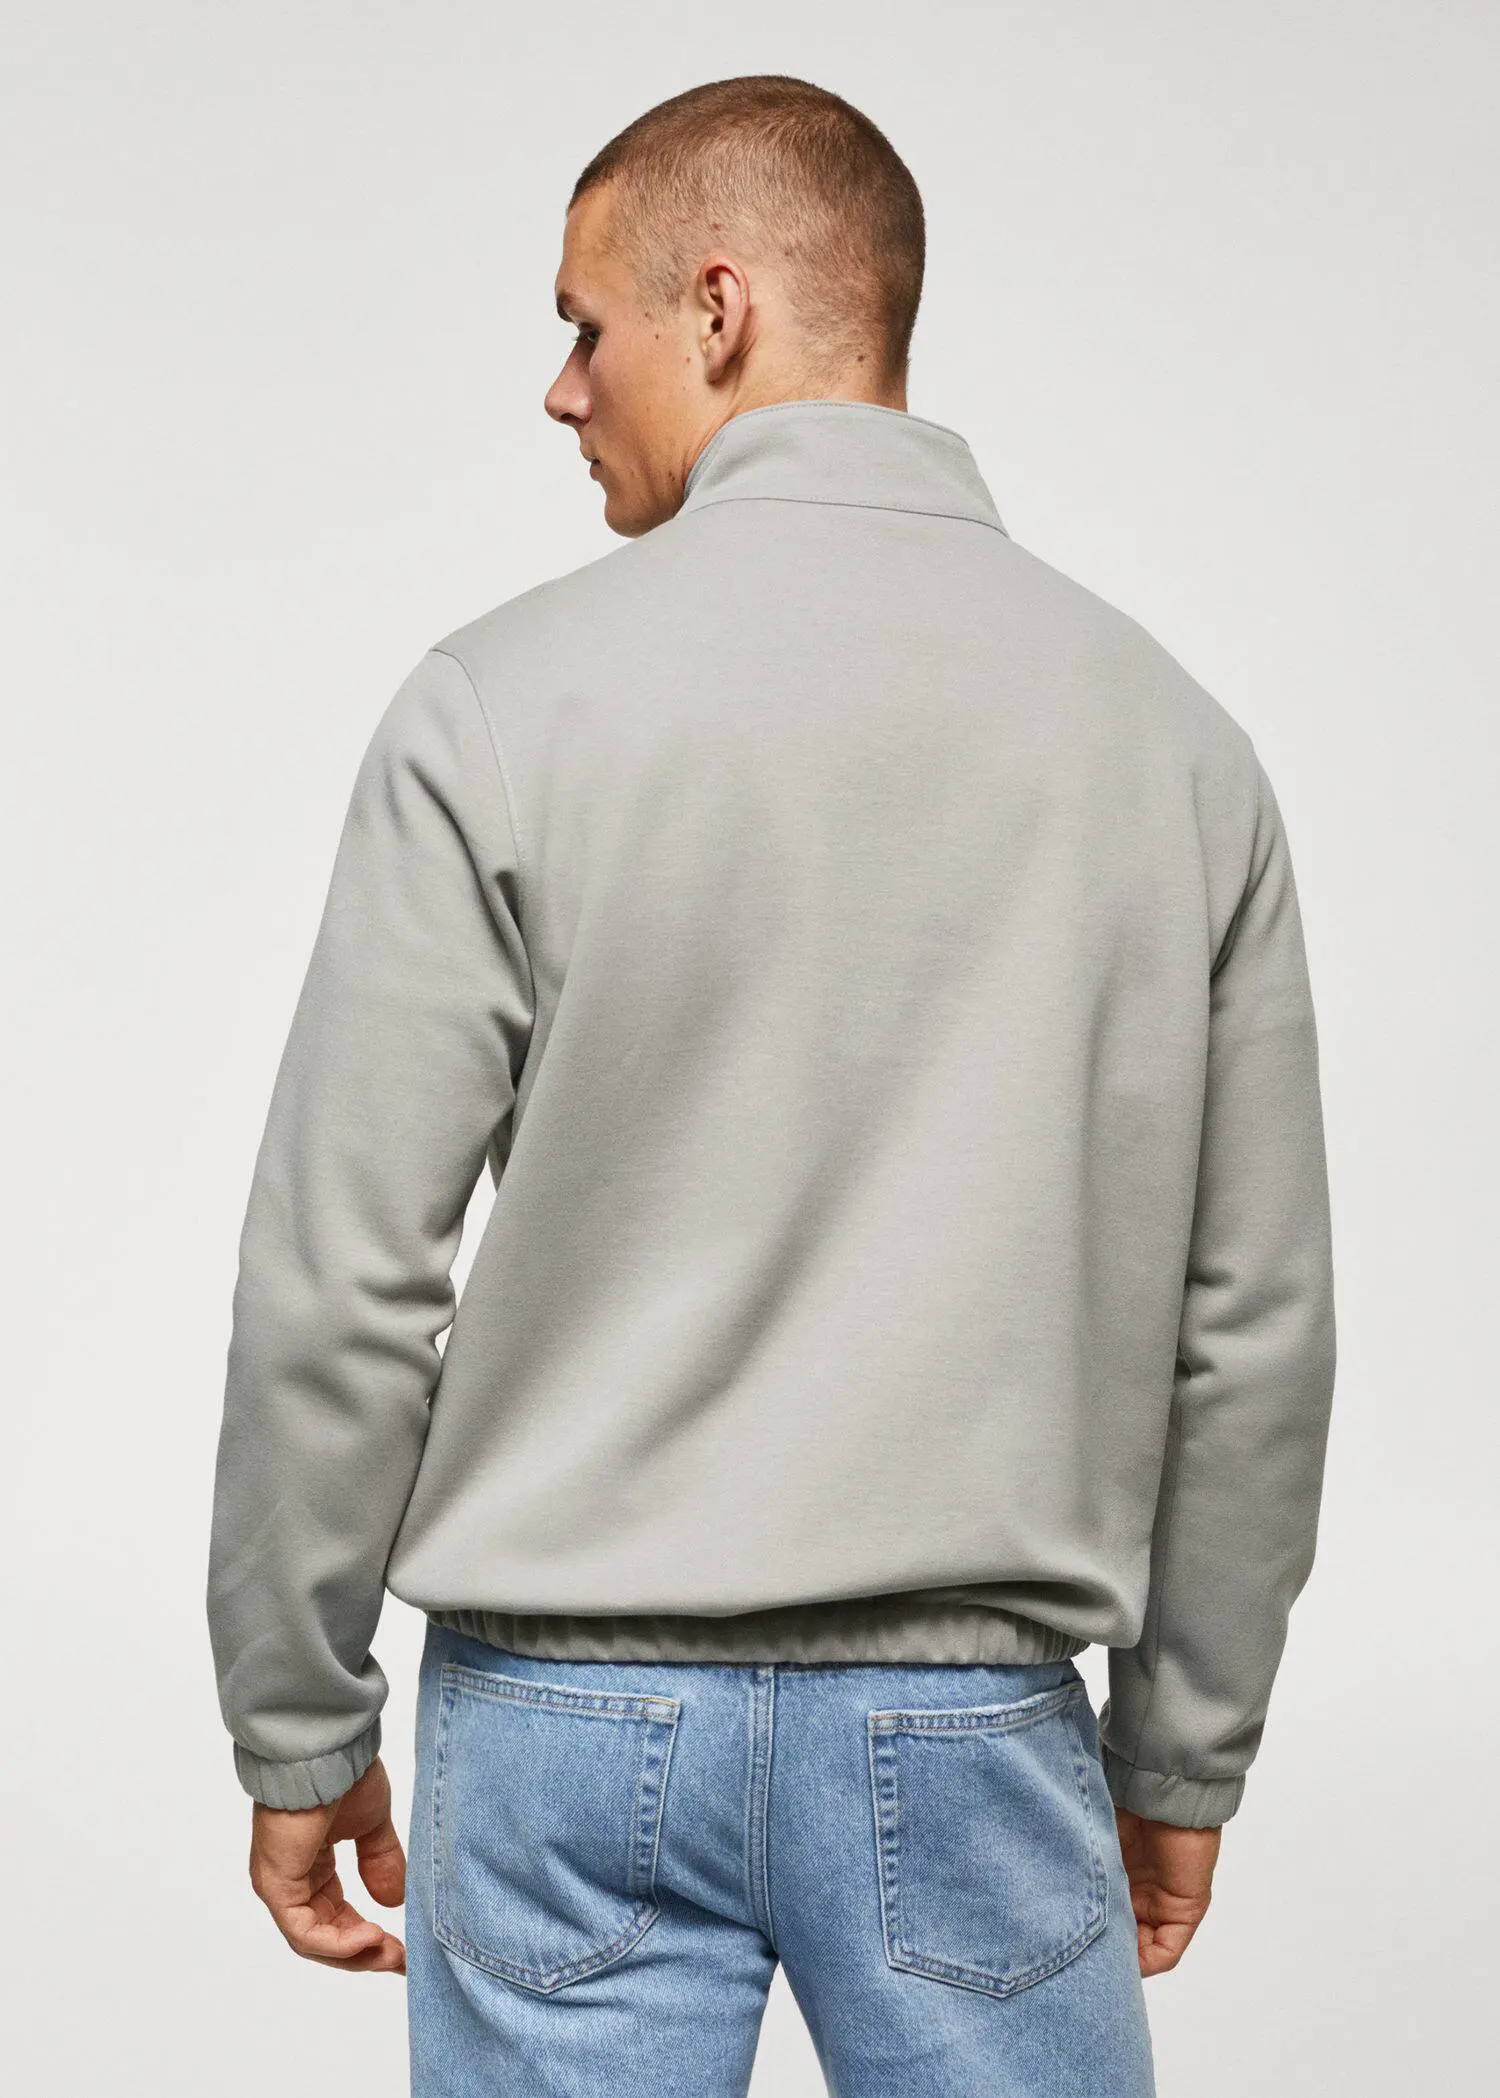 Mango Cotton sweatshirt with zipper neck. 3